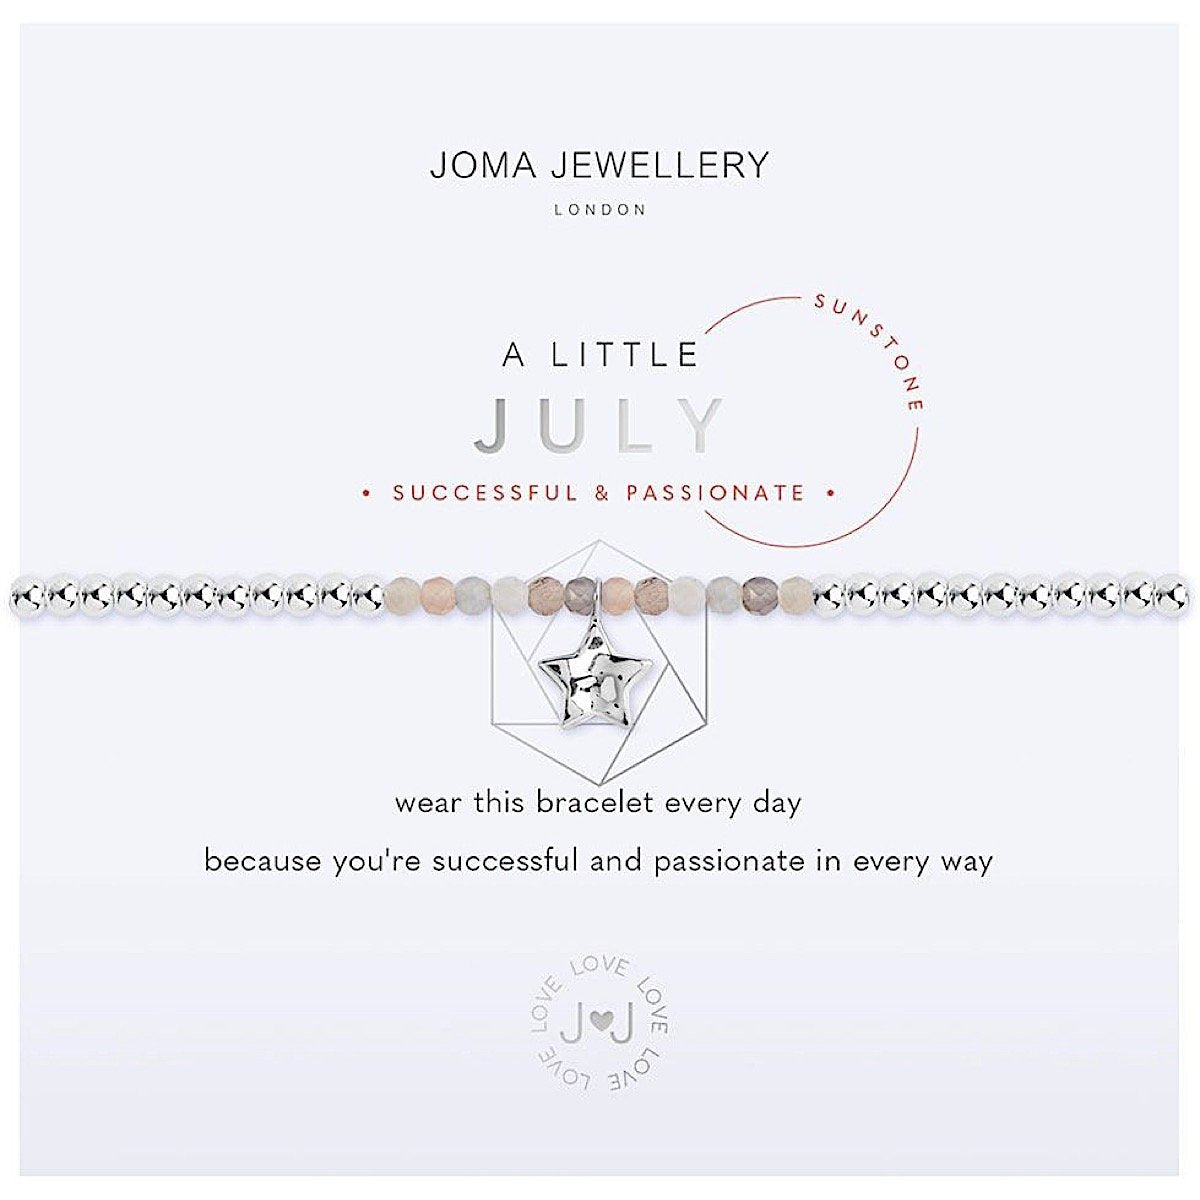 Joma Jewellery - July Birthstone - Sunstone - Successful & Passionate